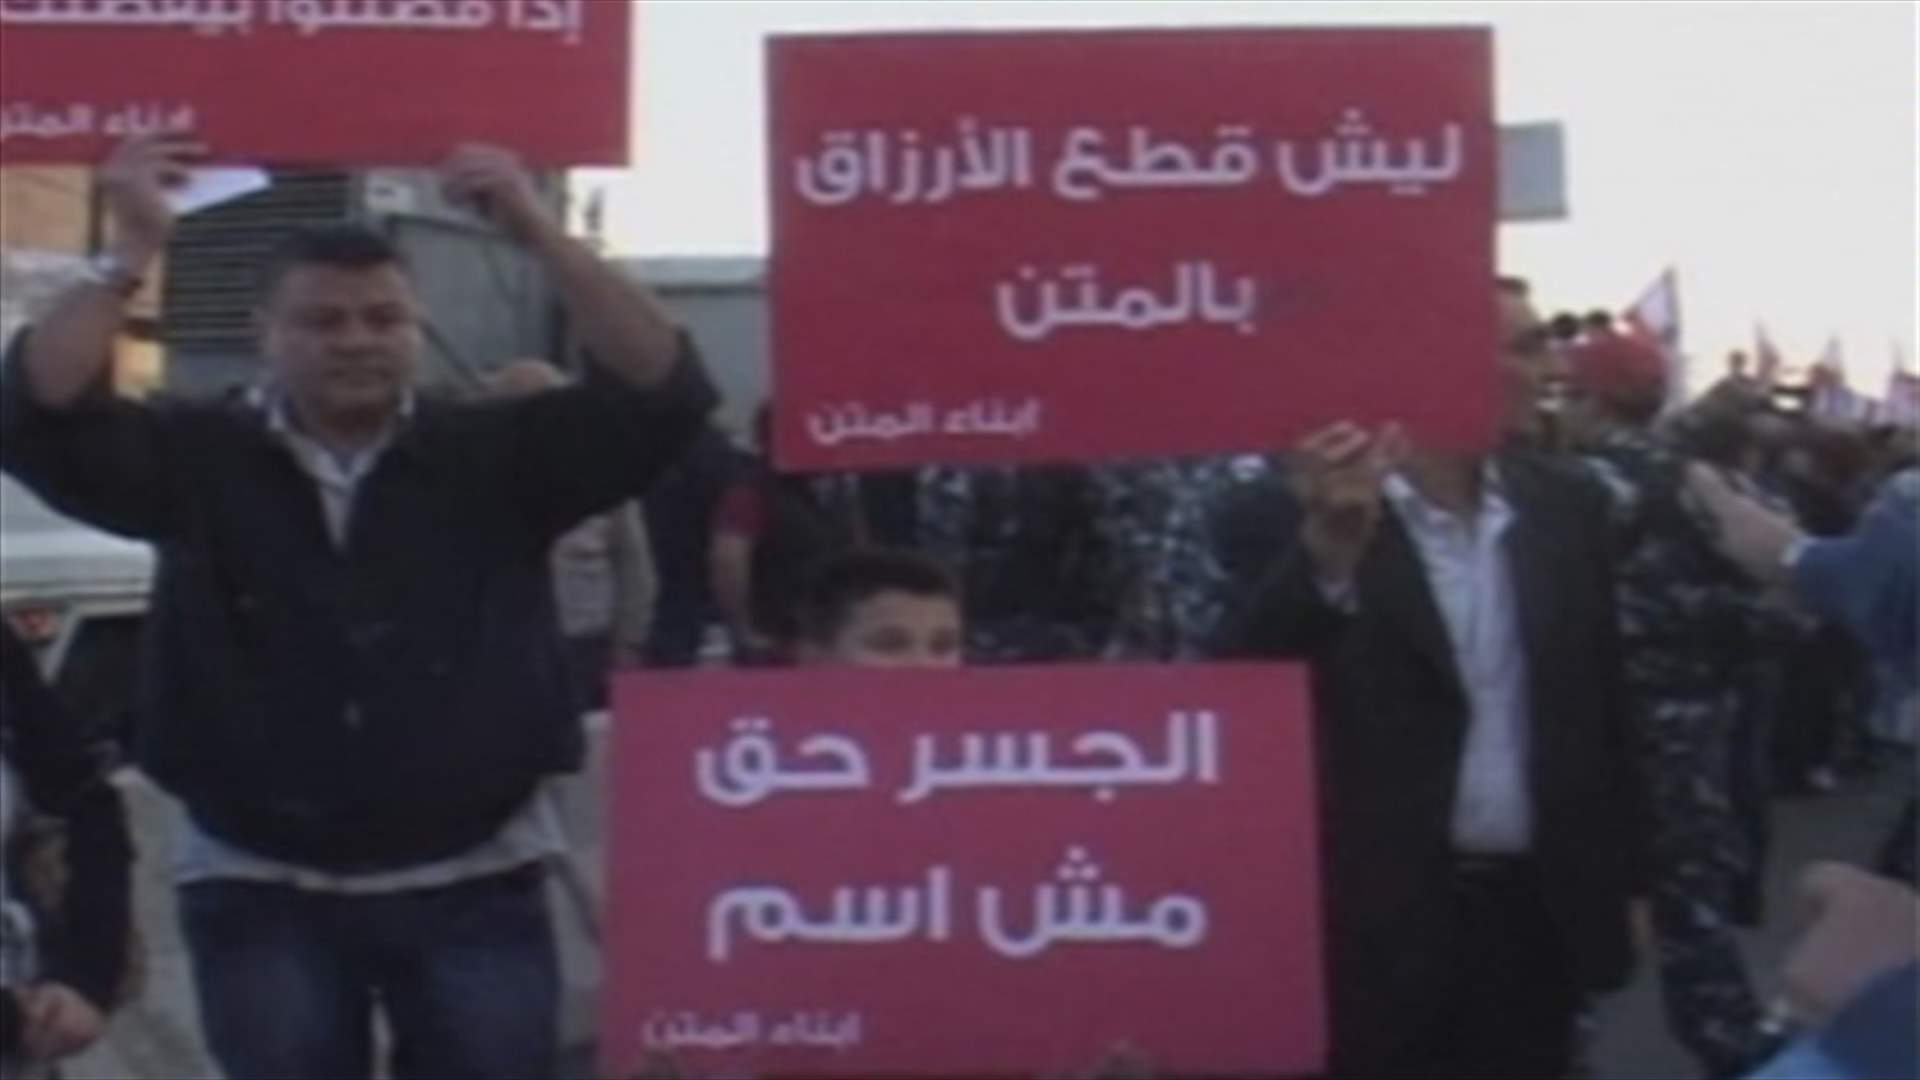 Jal el Dib residents blocked roads protesting lack of alternative roads